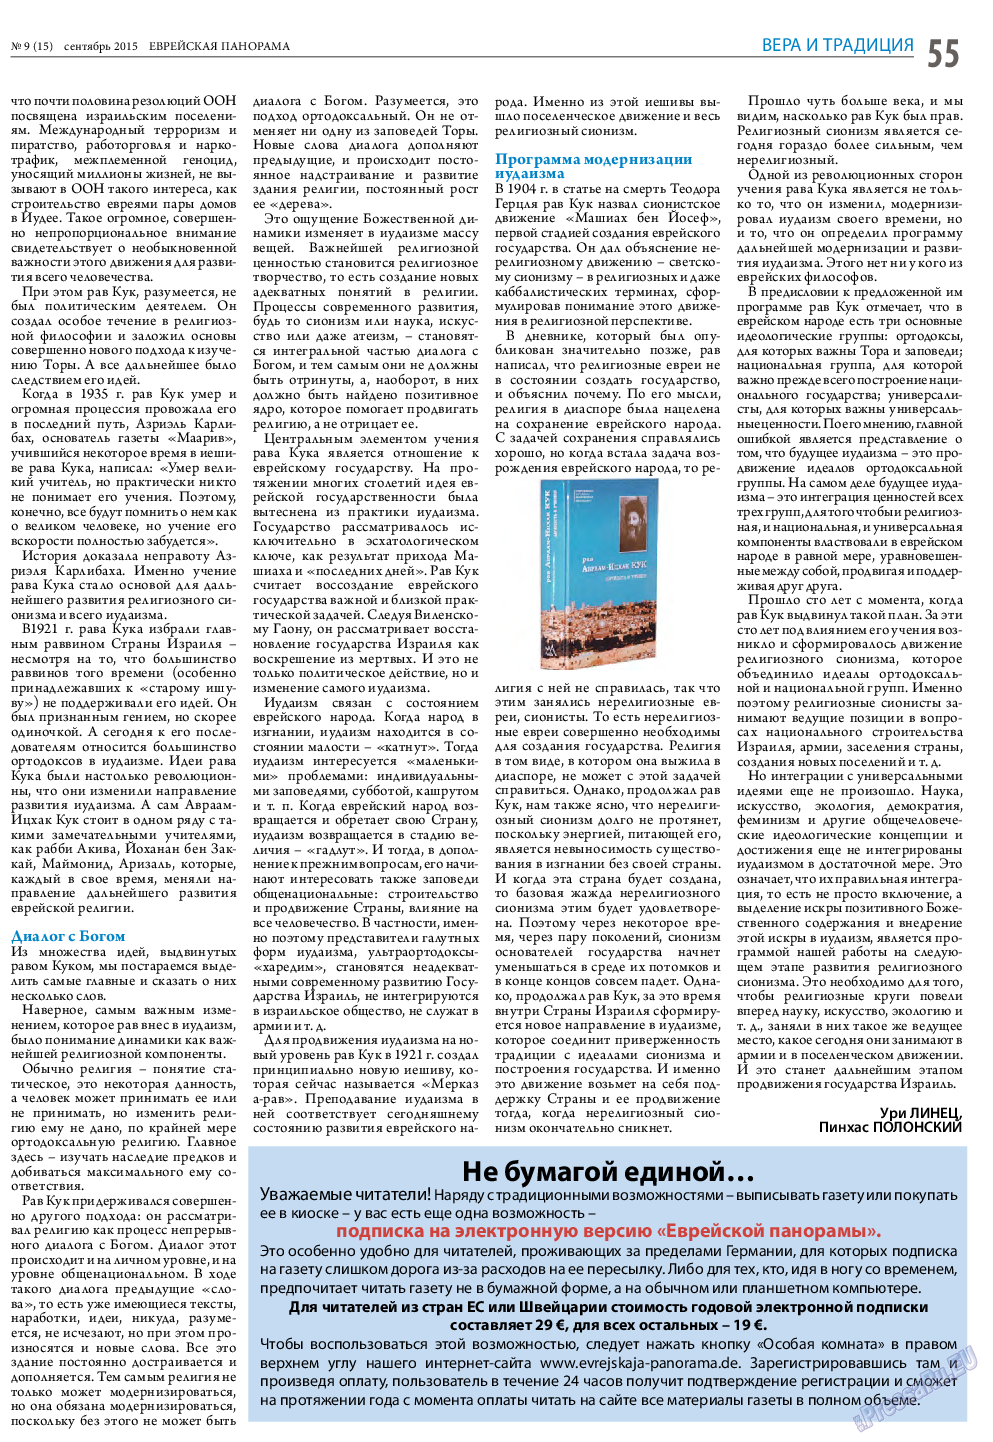 Еврейская панорама, газета. 2015 №9 стр.55